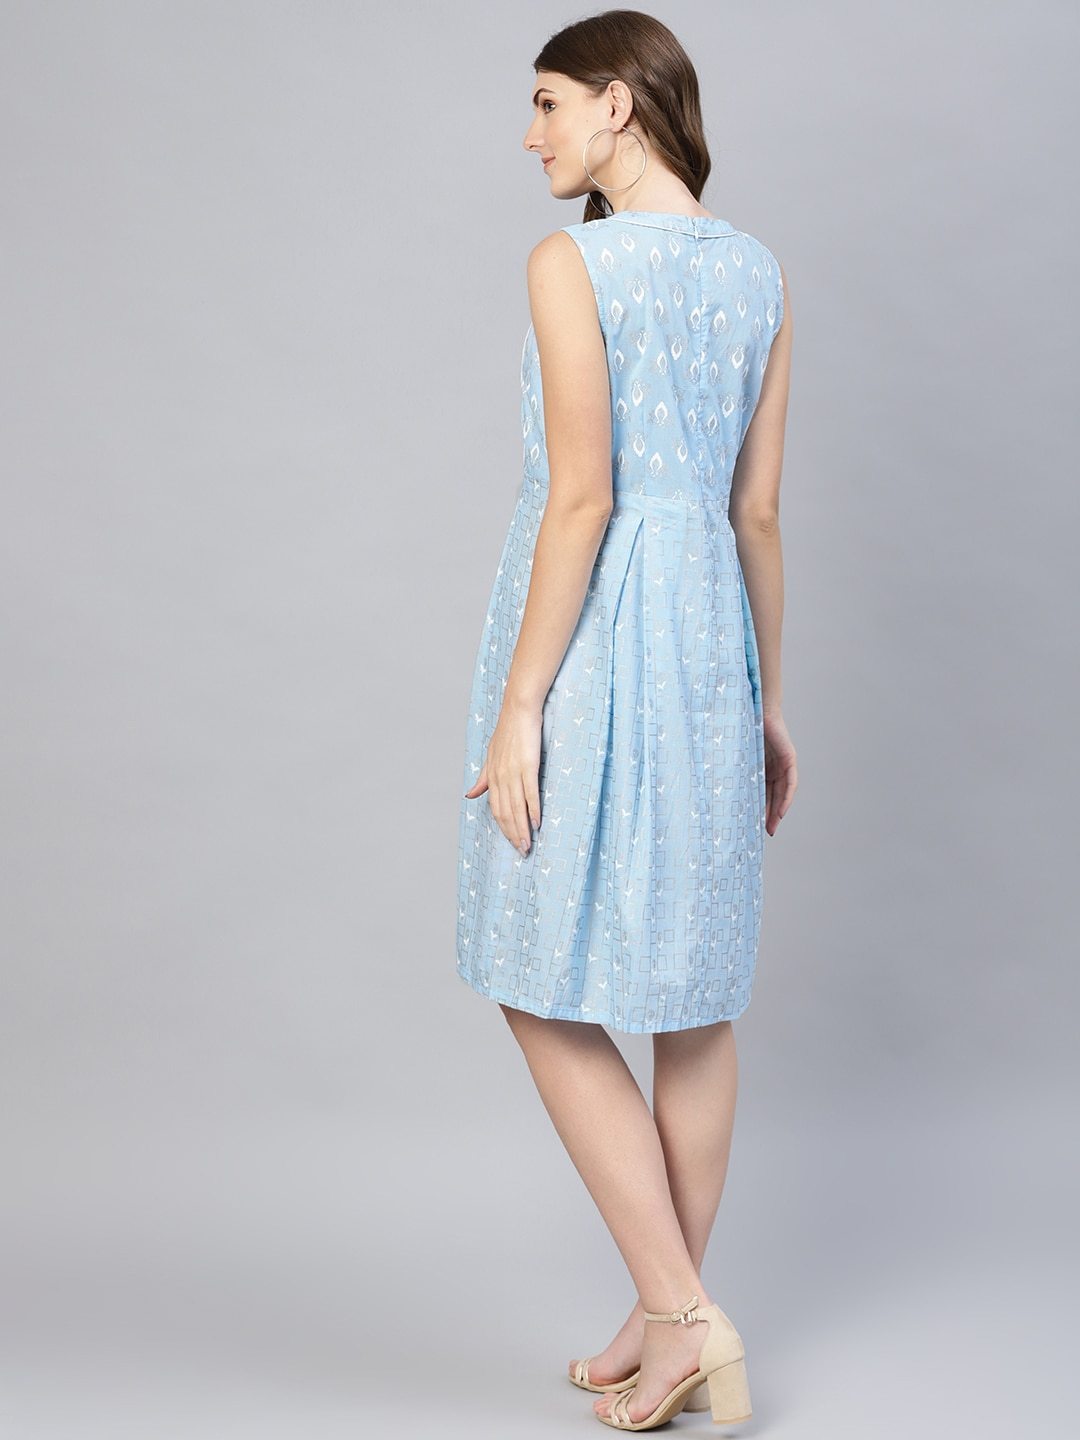 Women's  Blue & White Khari Print A-Line Dress - AKS